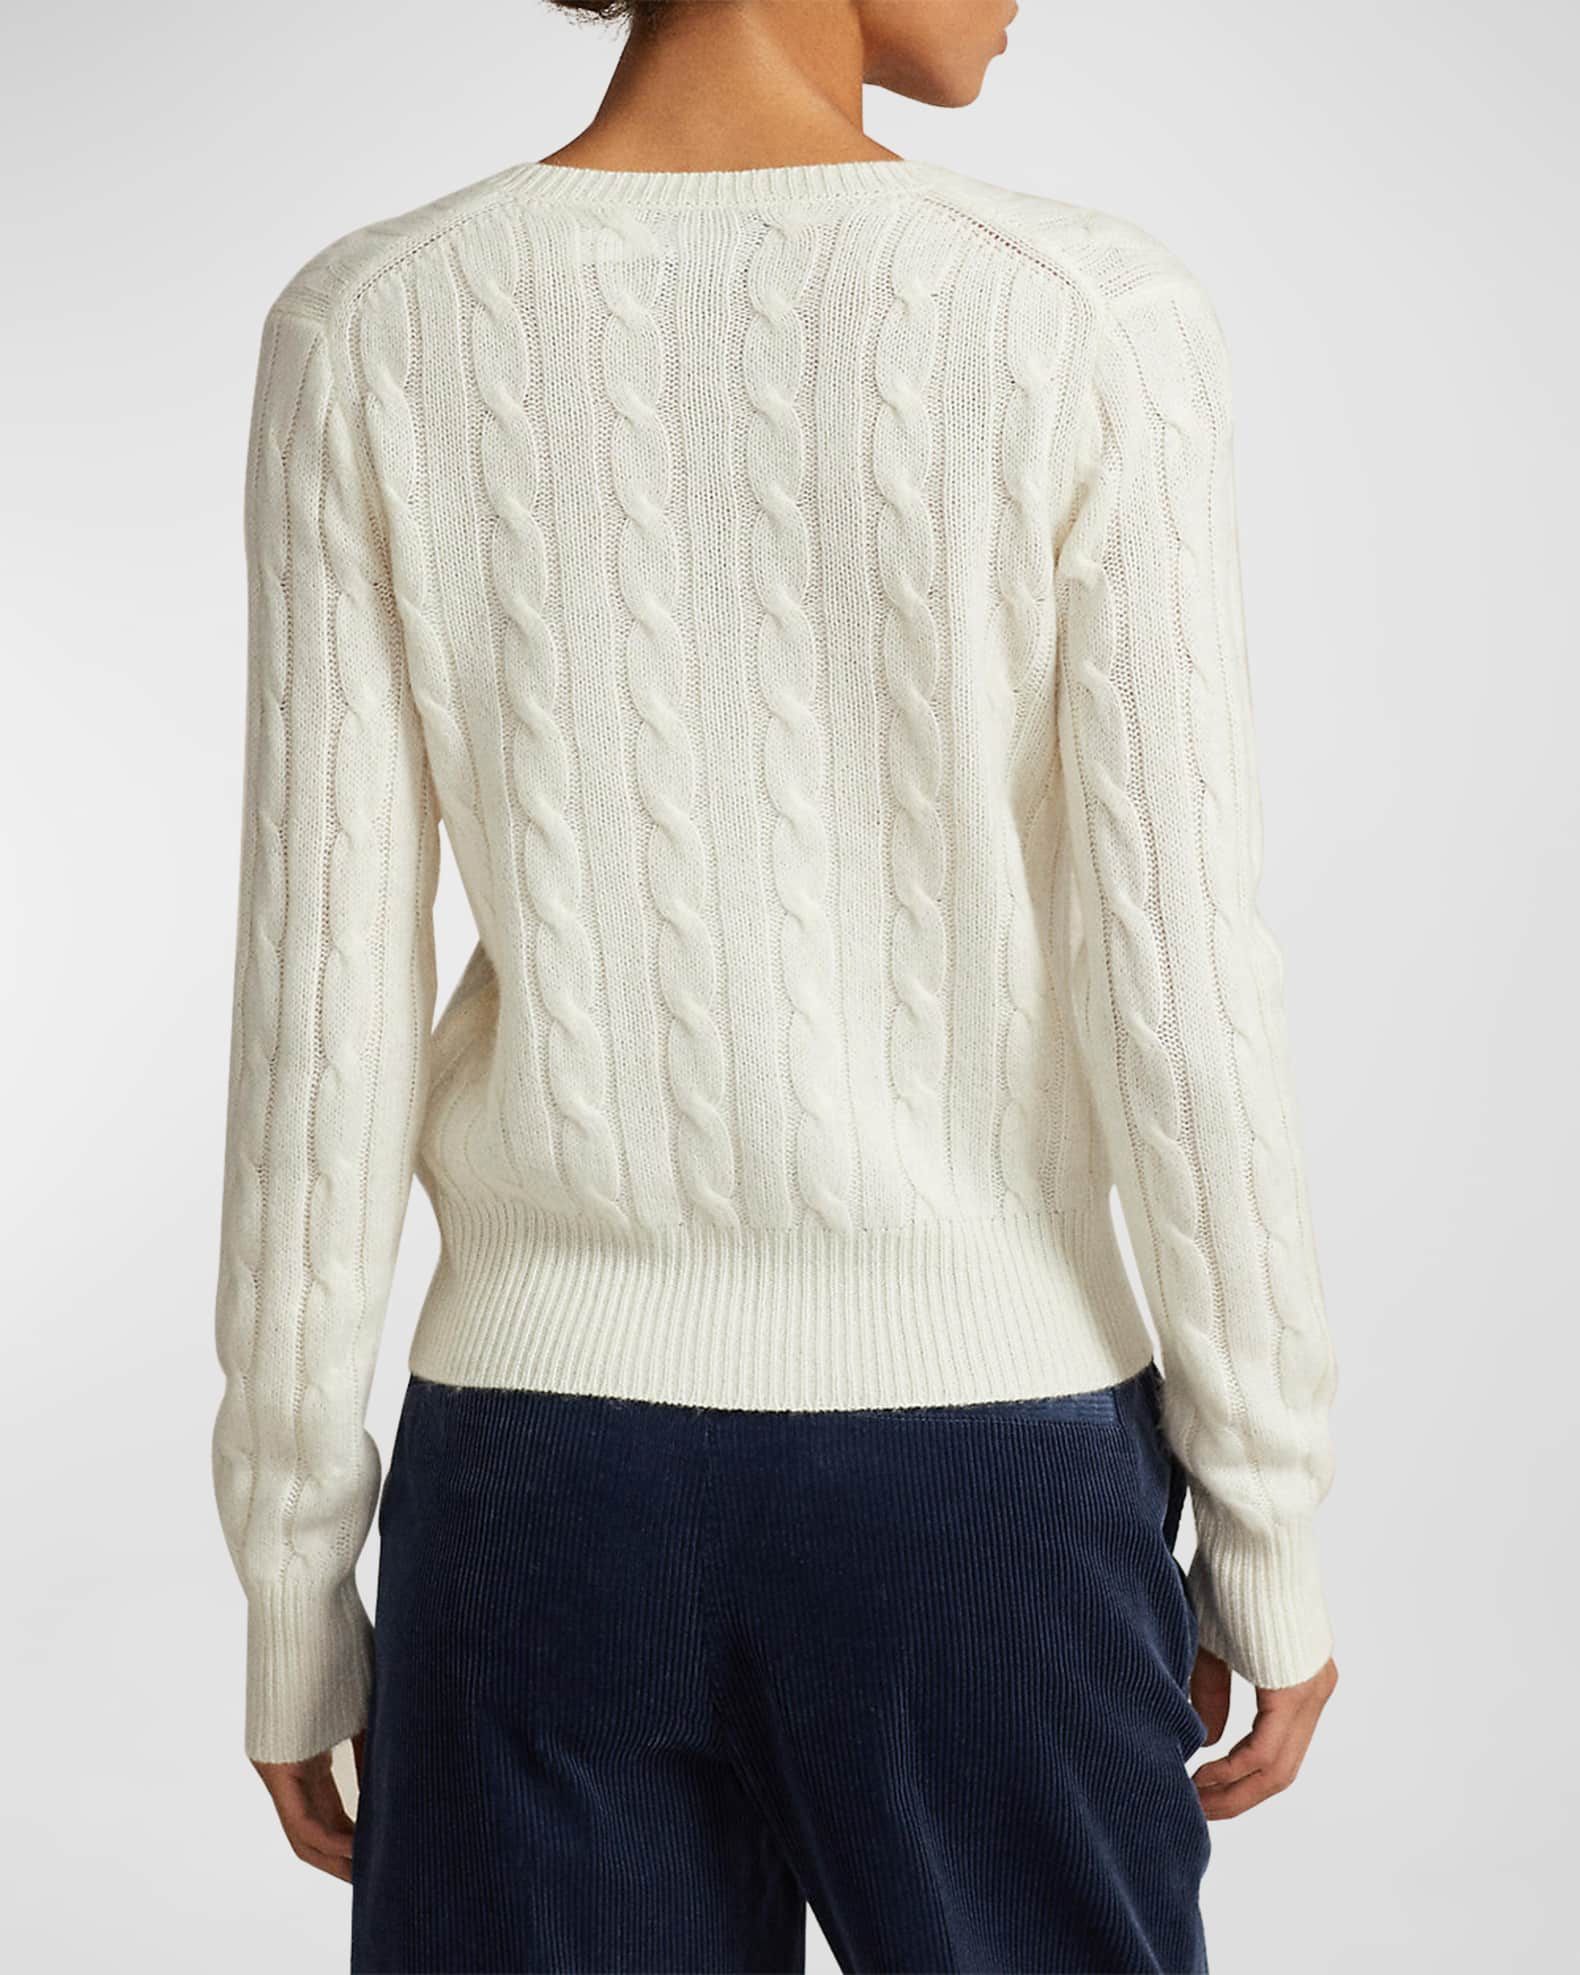 Ralph Lauren Women's Cable-Knit Cashmere Crewneck Cardigan - Size L in Cream